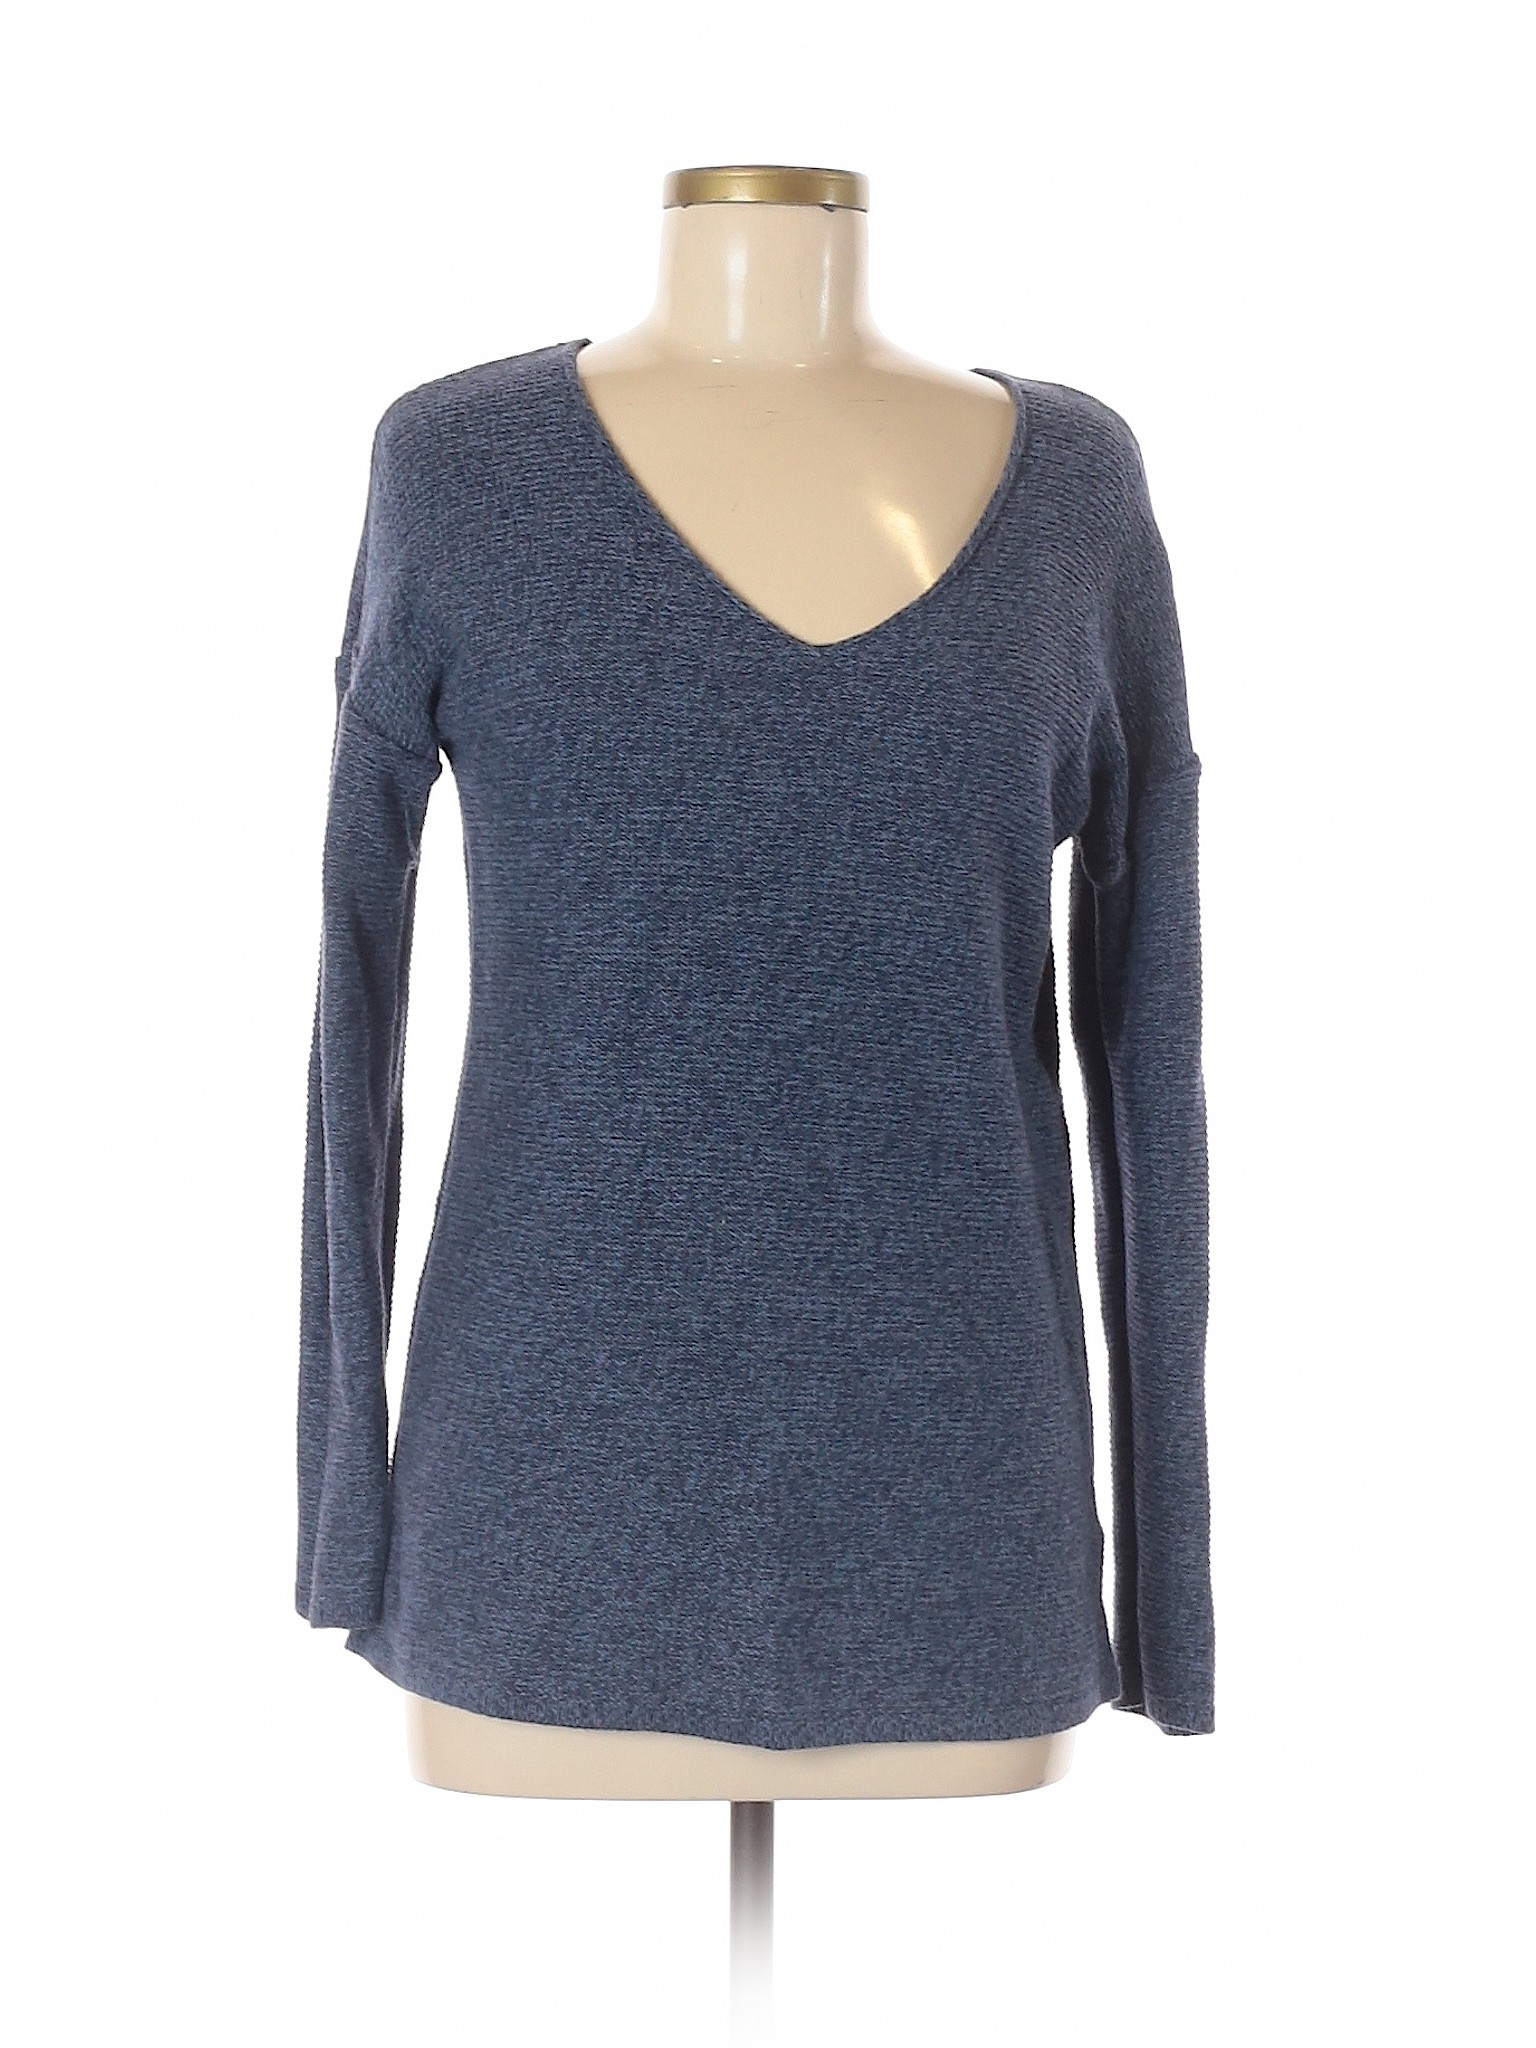 Old Navy Women Blue Pullover Sweater M | eBay